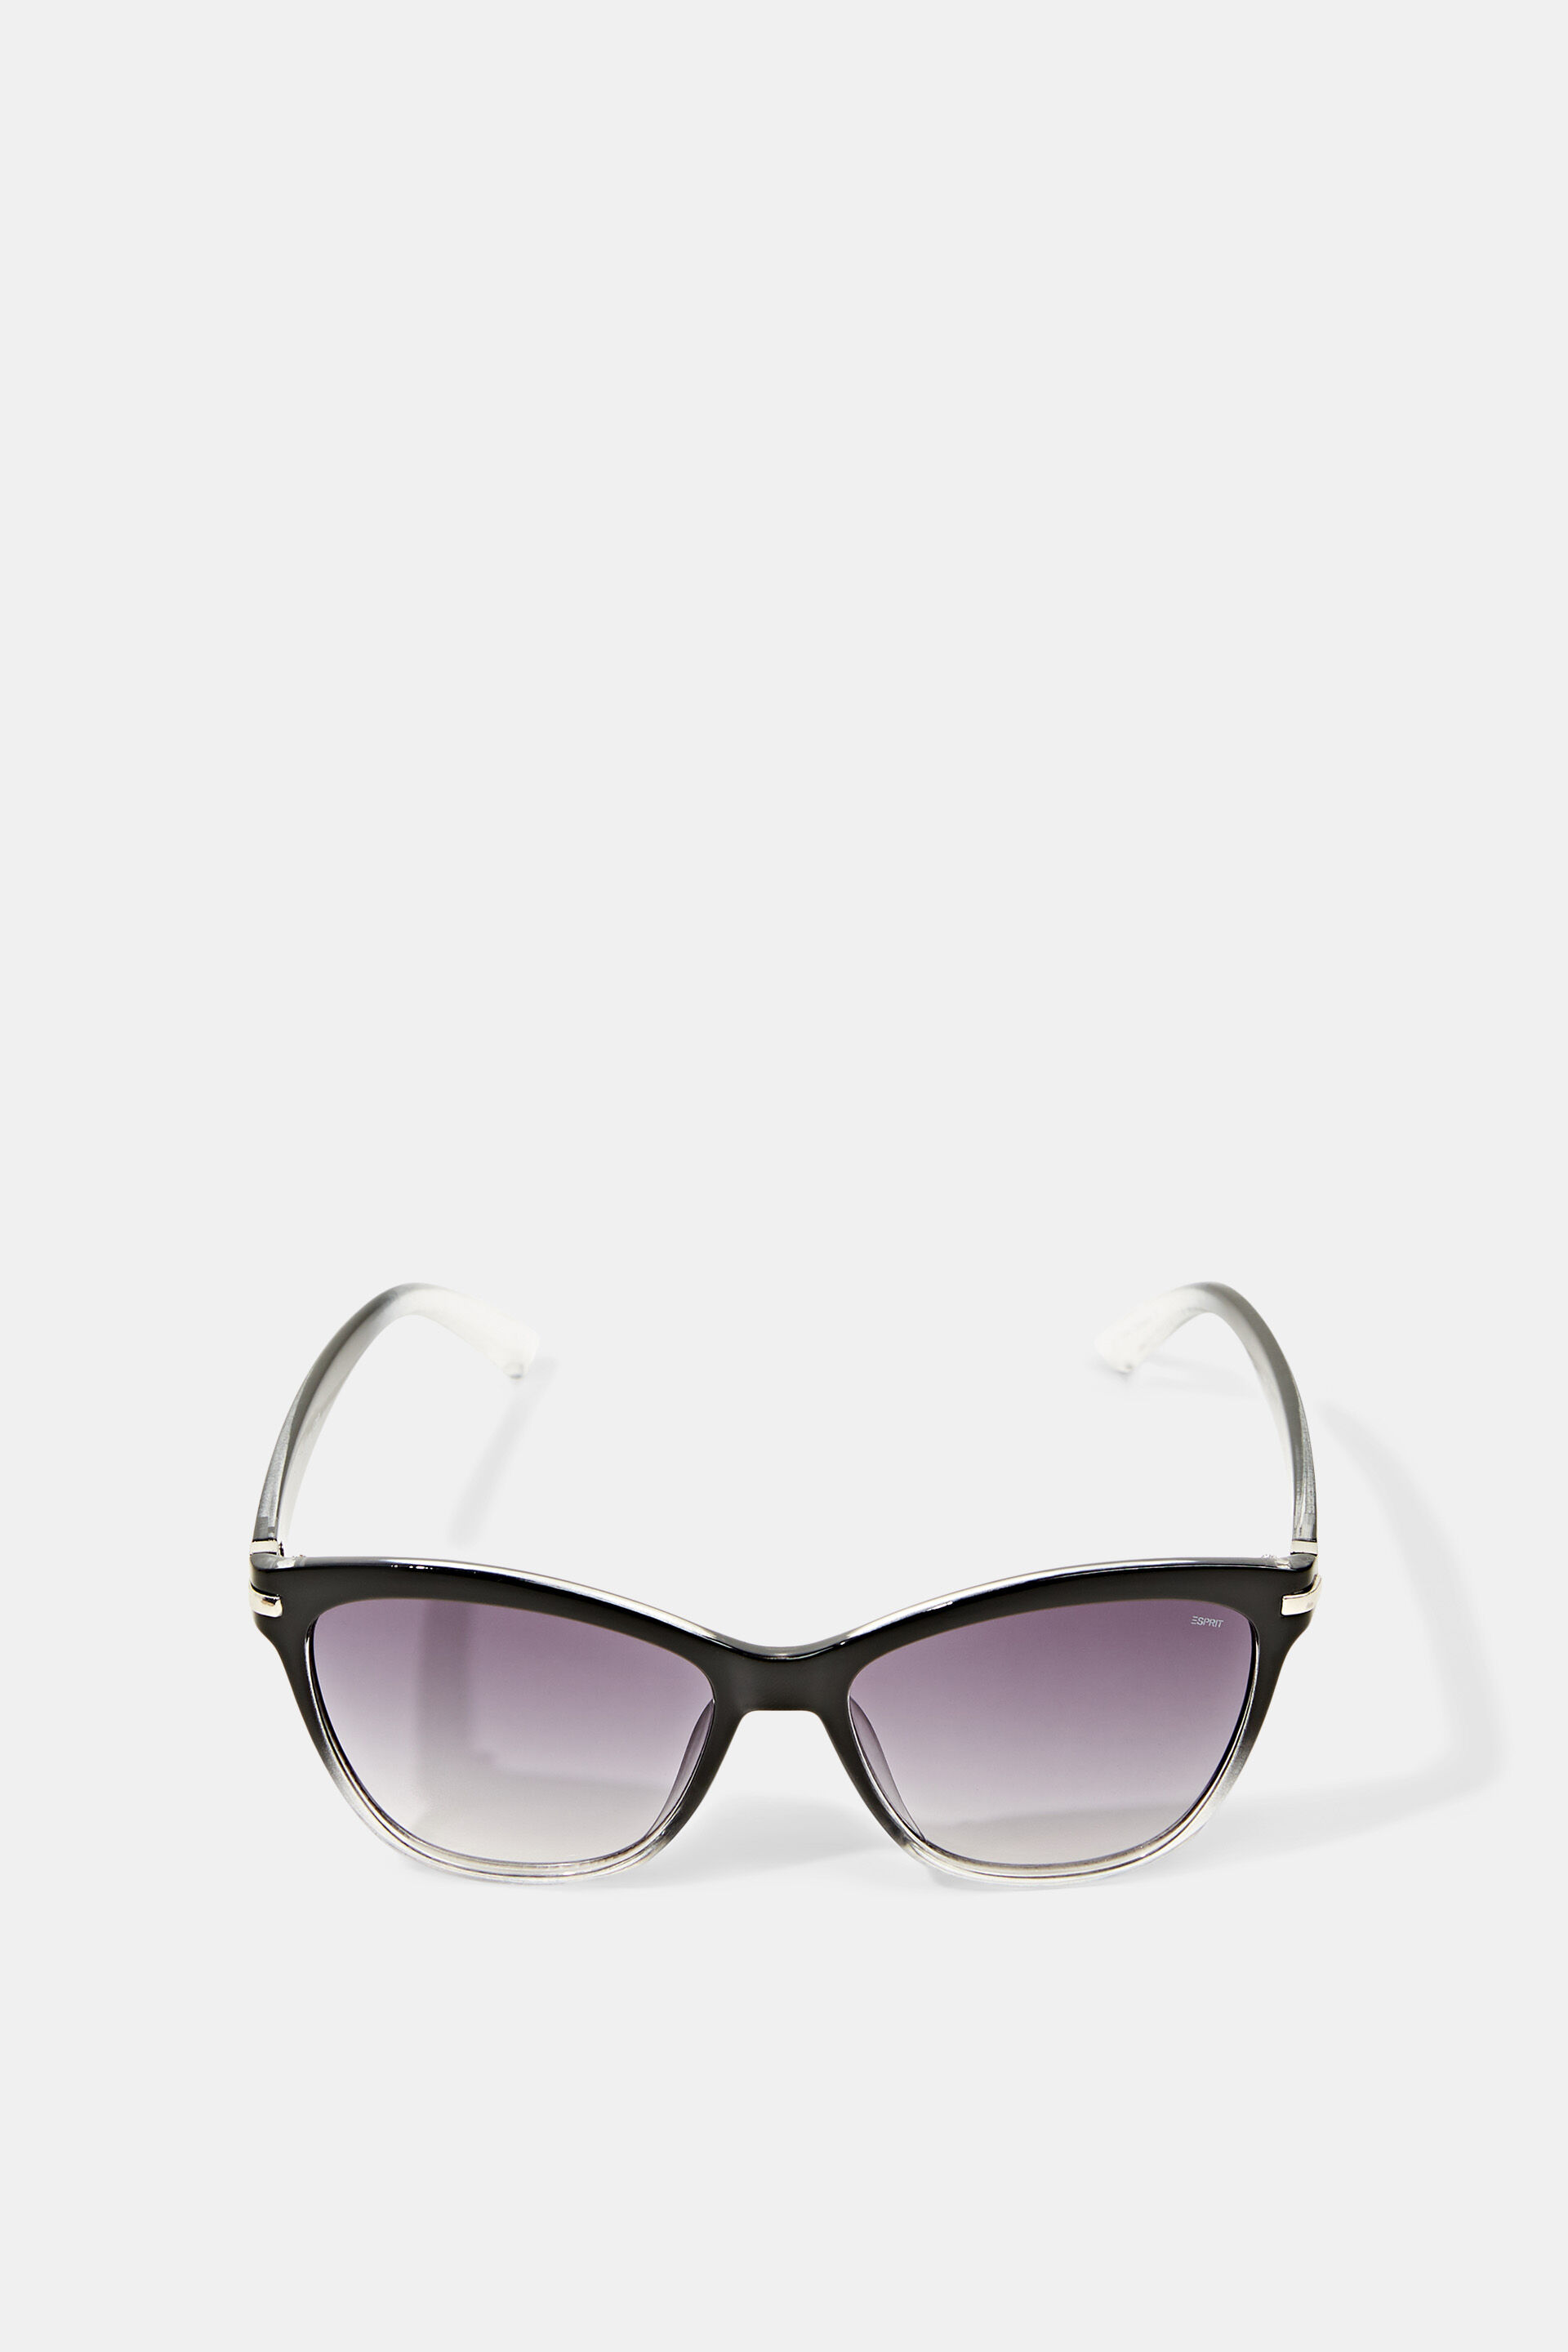 Esprit metal Sunglasses with details